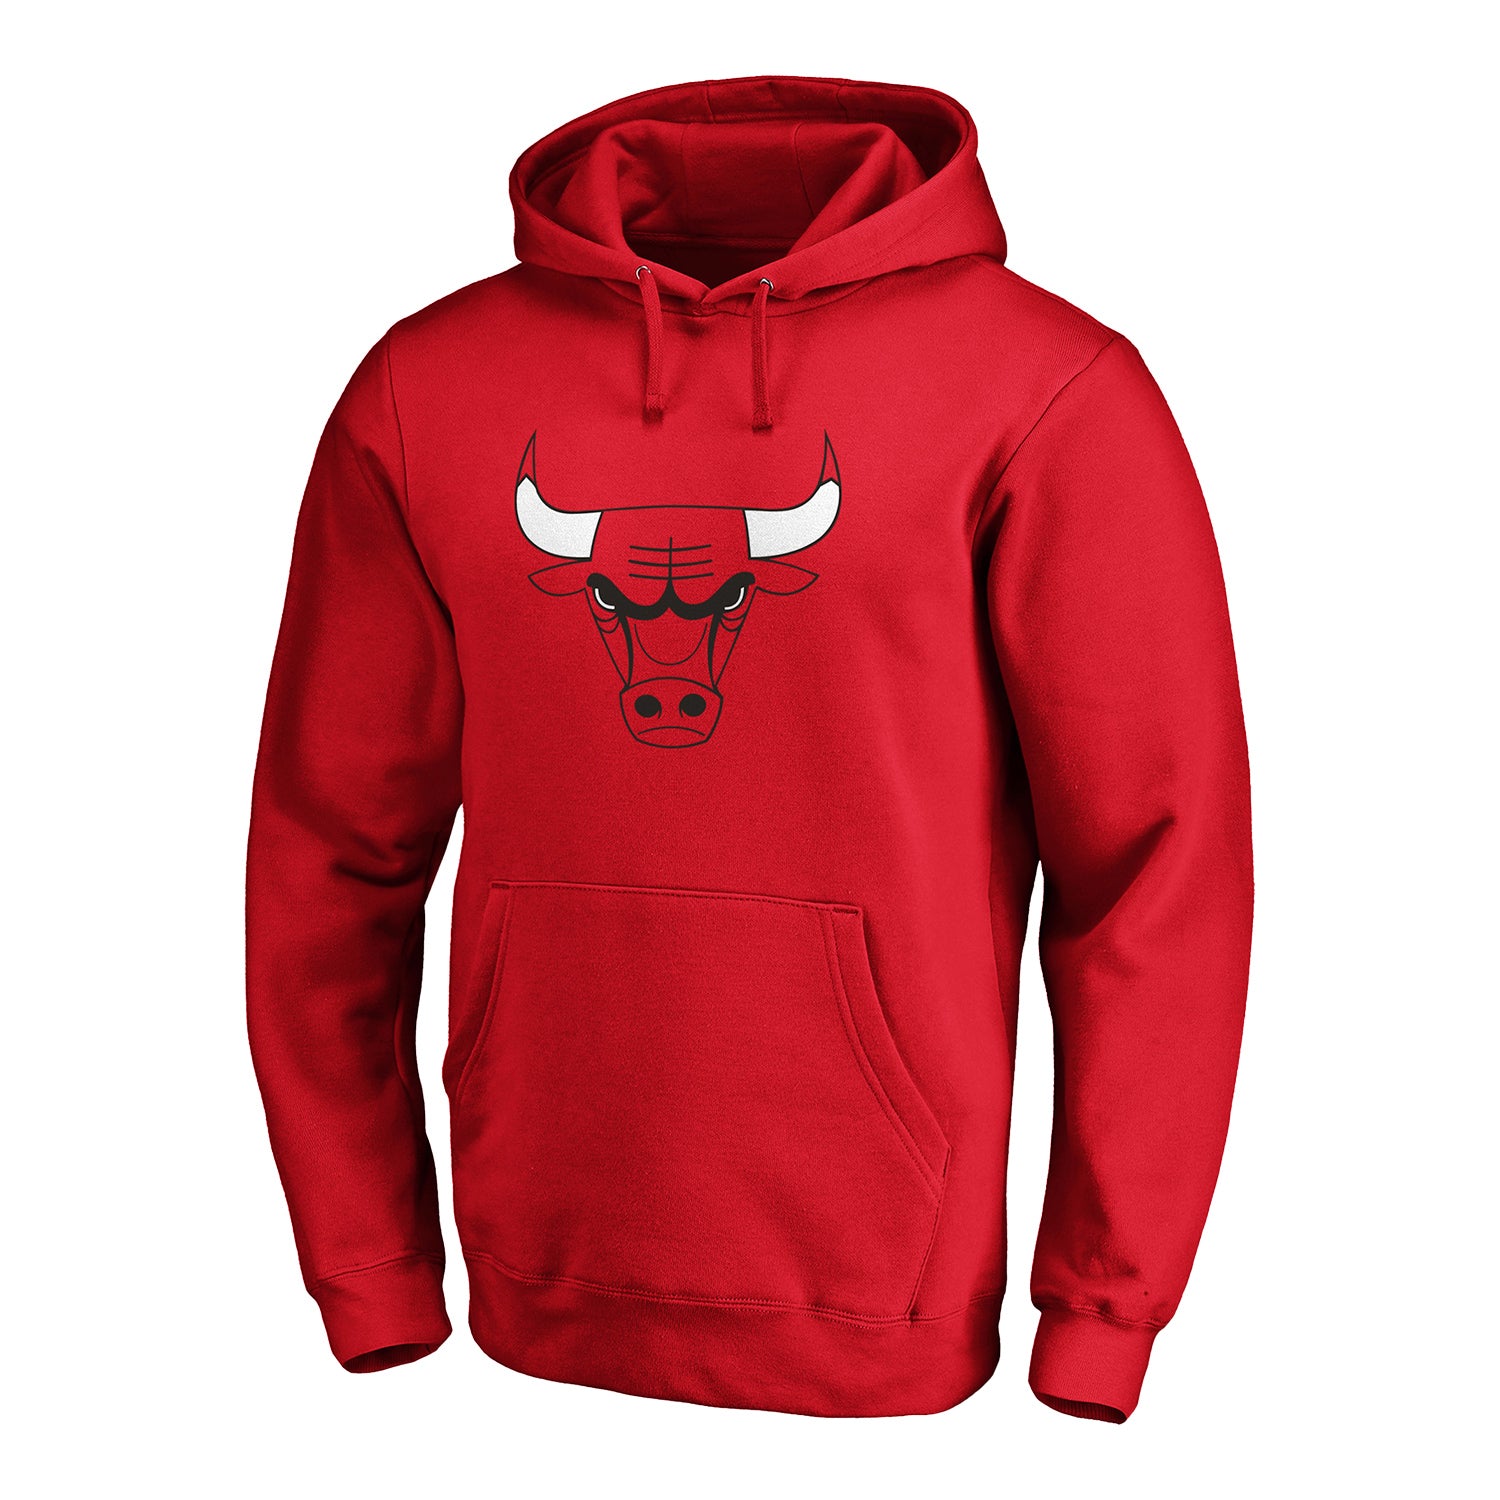 Black BOYS & TEENS Regular Fit Chicago Bulls Licensed Hooded